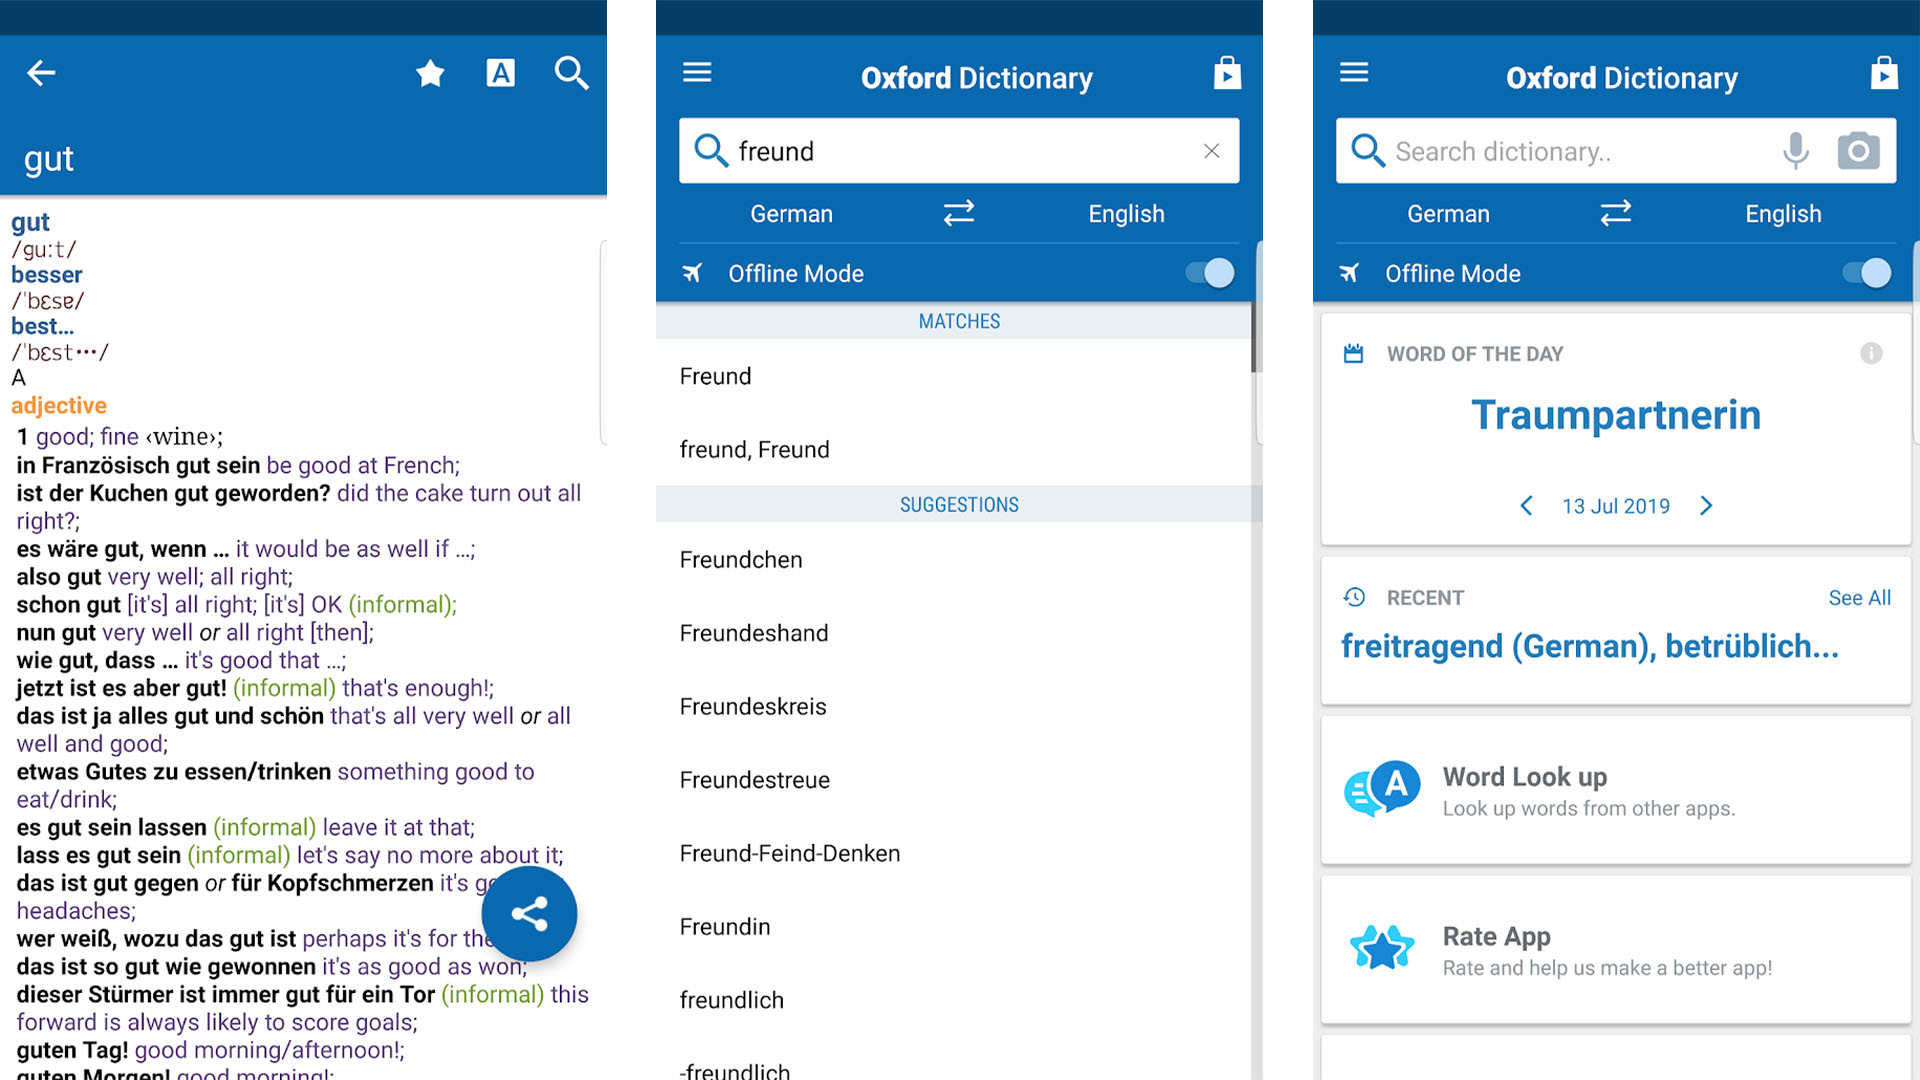 Oxford German Dictionary screenshot 2020